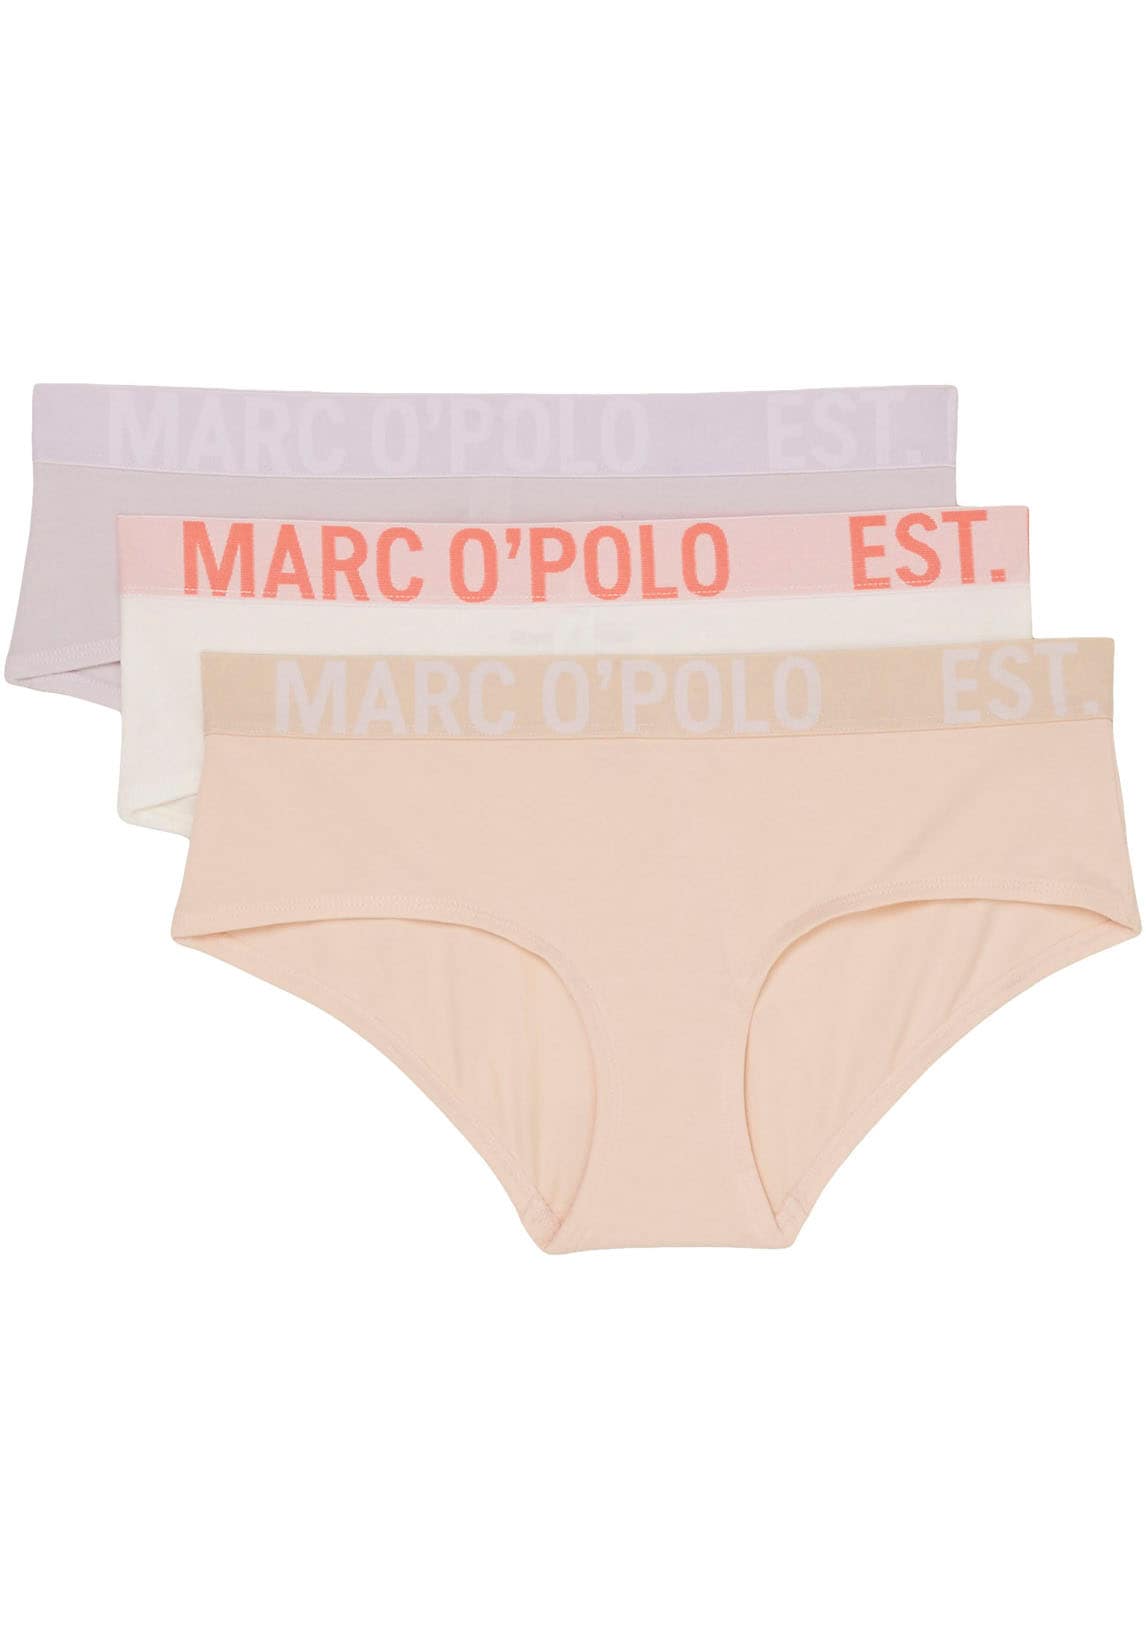 Marc O'Polo Kelnaitės (3er Pack)